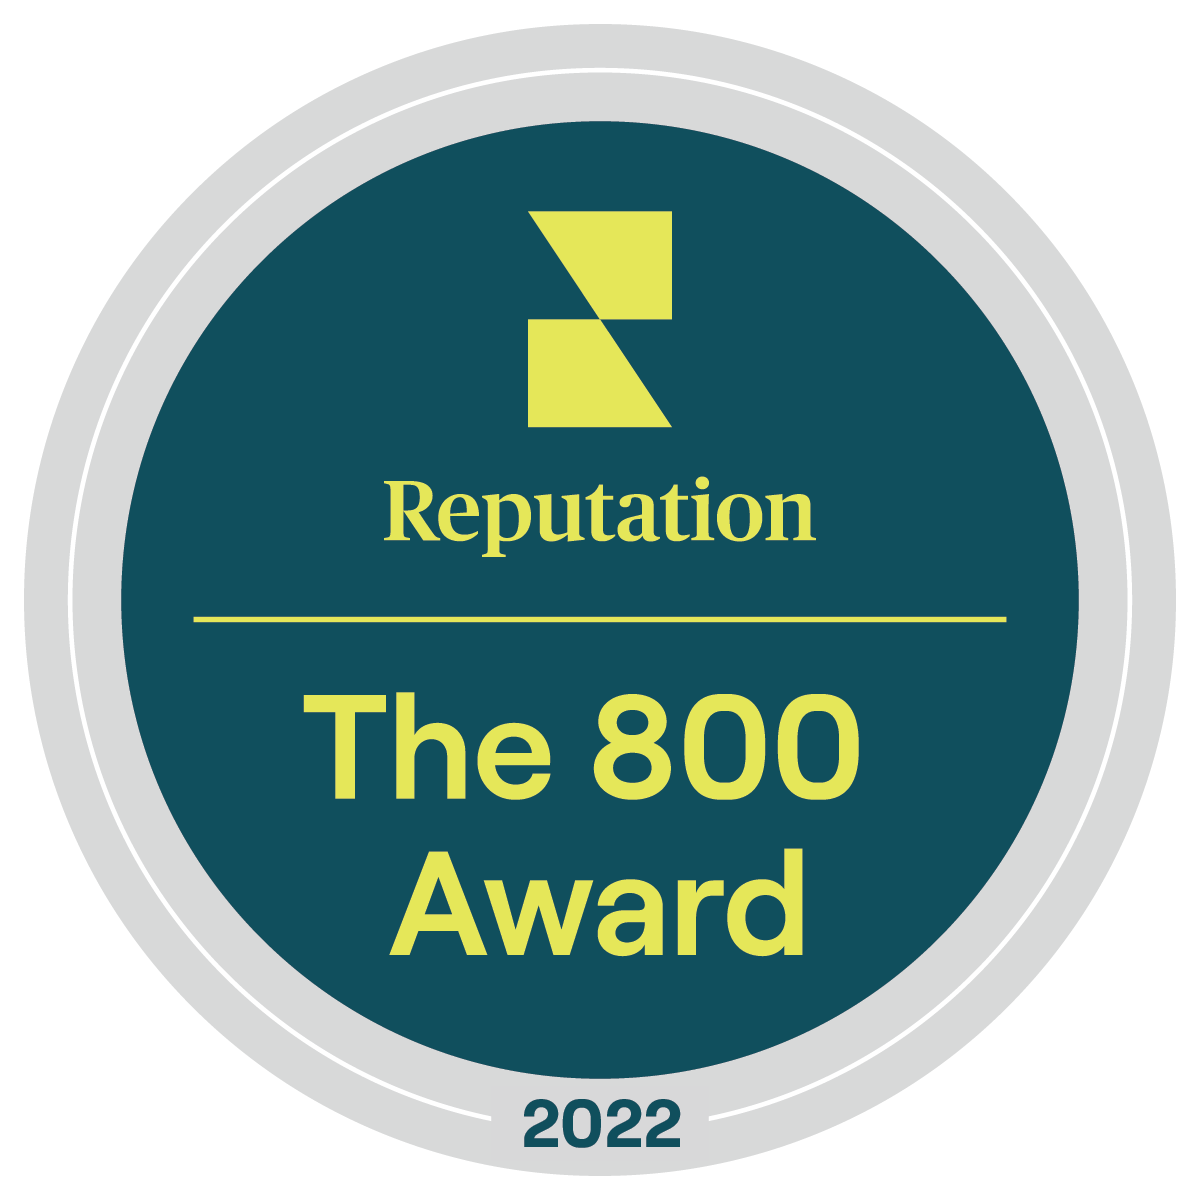 Awarded the Reputaiton.com 800 Award